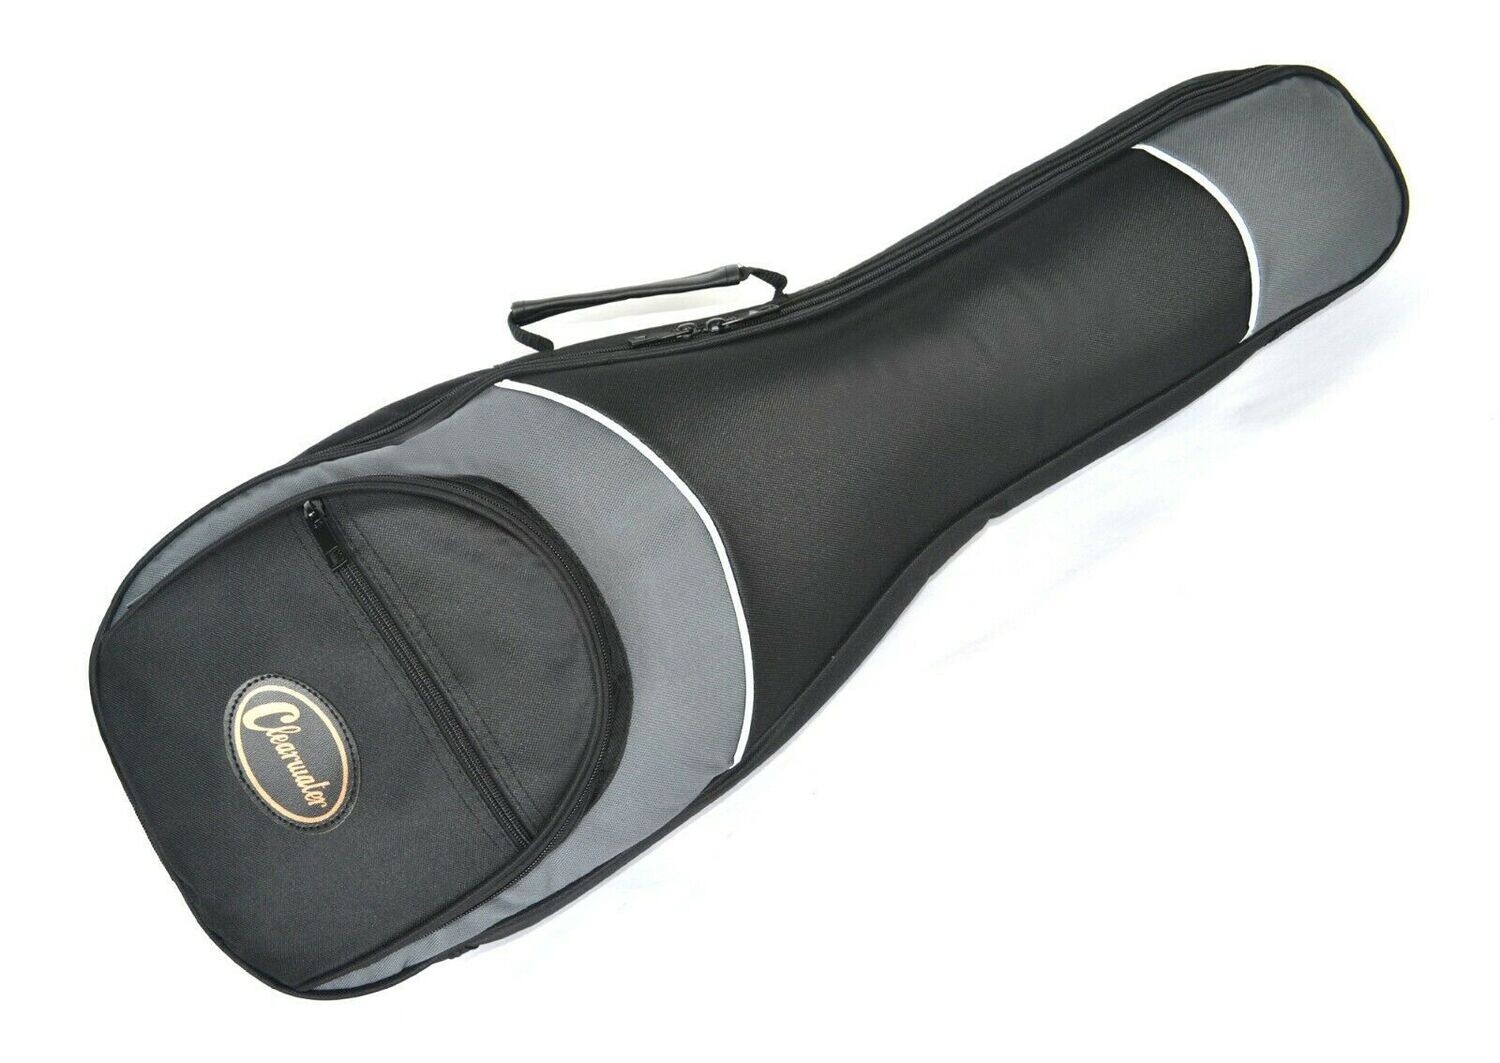 Concert Ukulele Gig Bag 25mm padding Black and Grey soft case by Clearwater